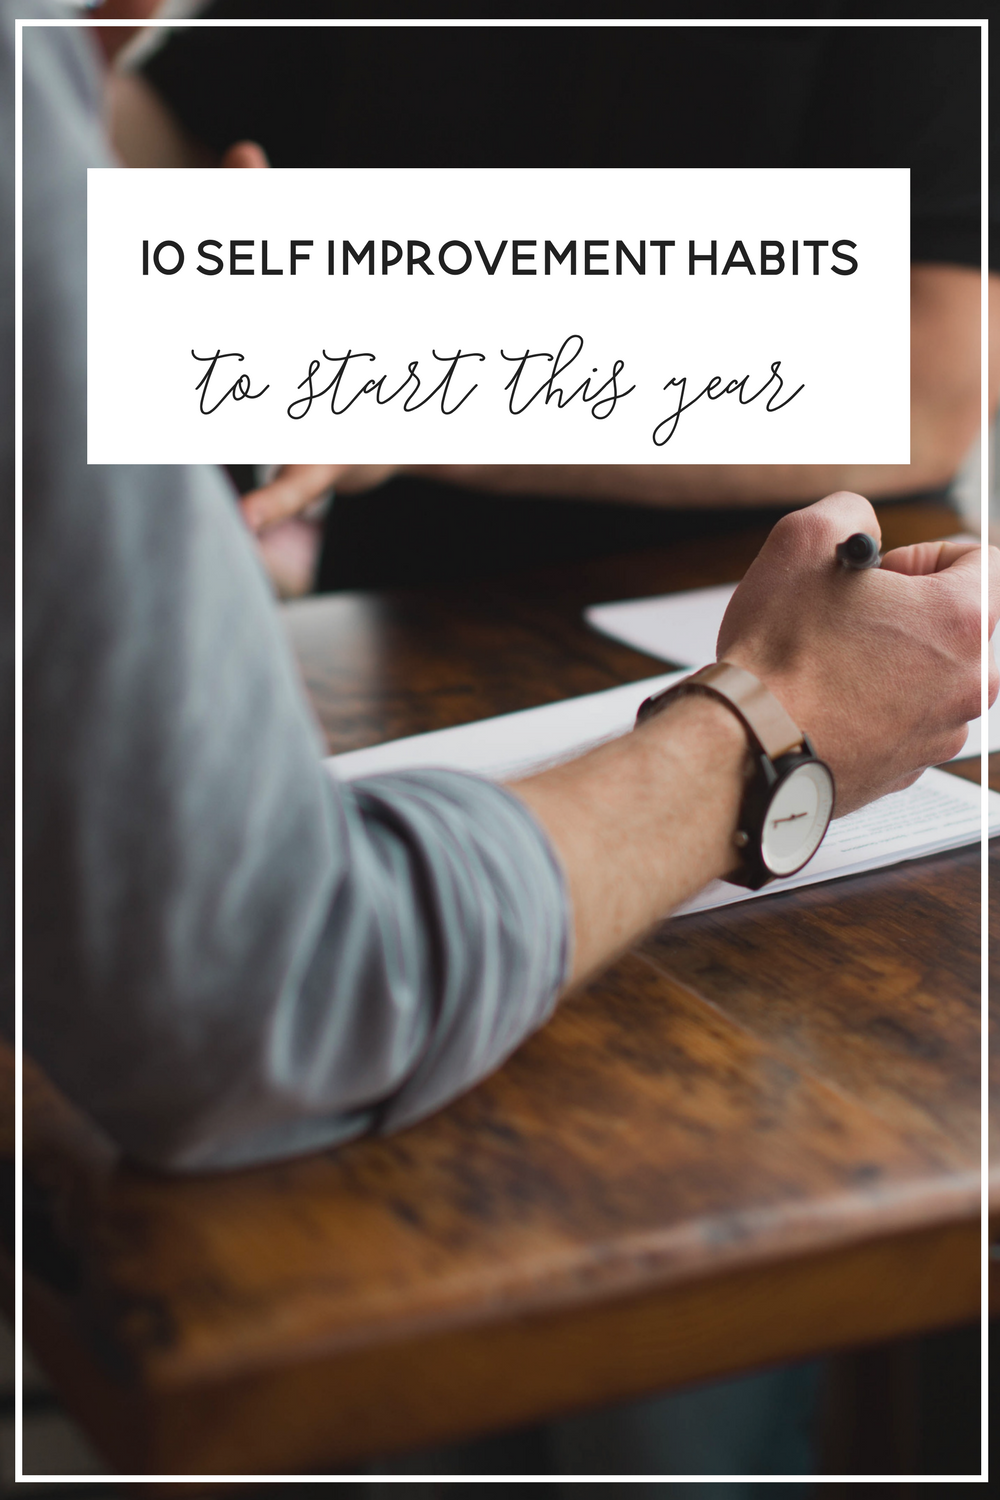 10 Self Improvement Habits to Start this year